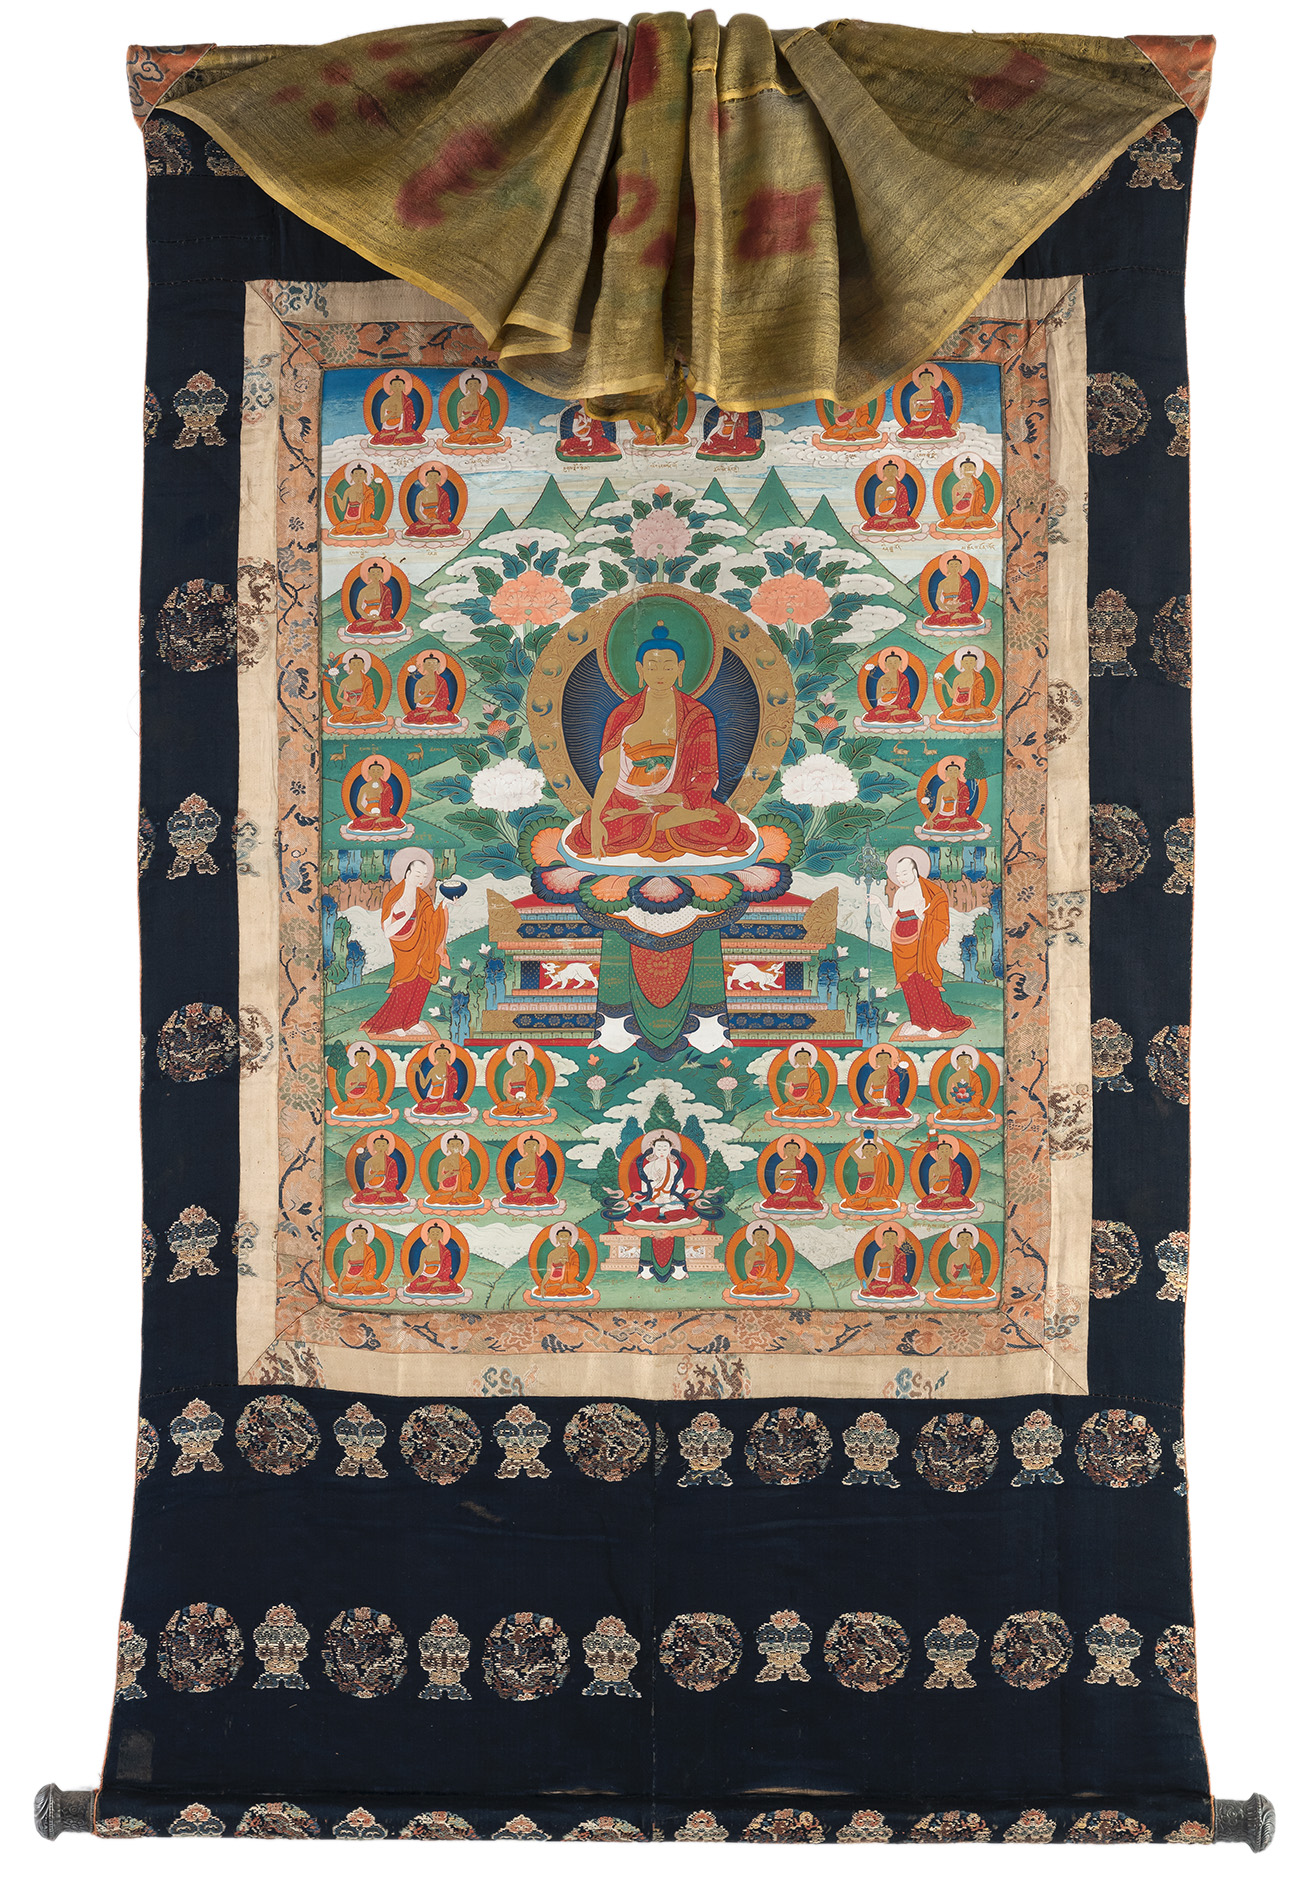 Feines Thangka des Buddha Shakyamuni in Seidenmotnierung